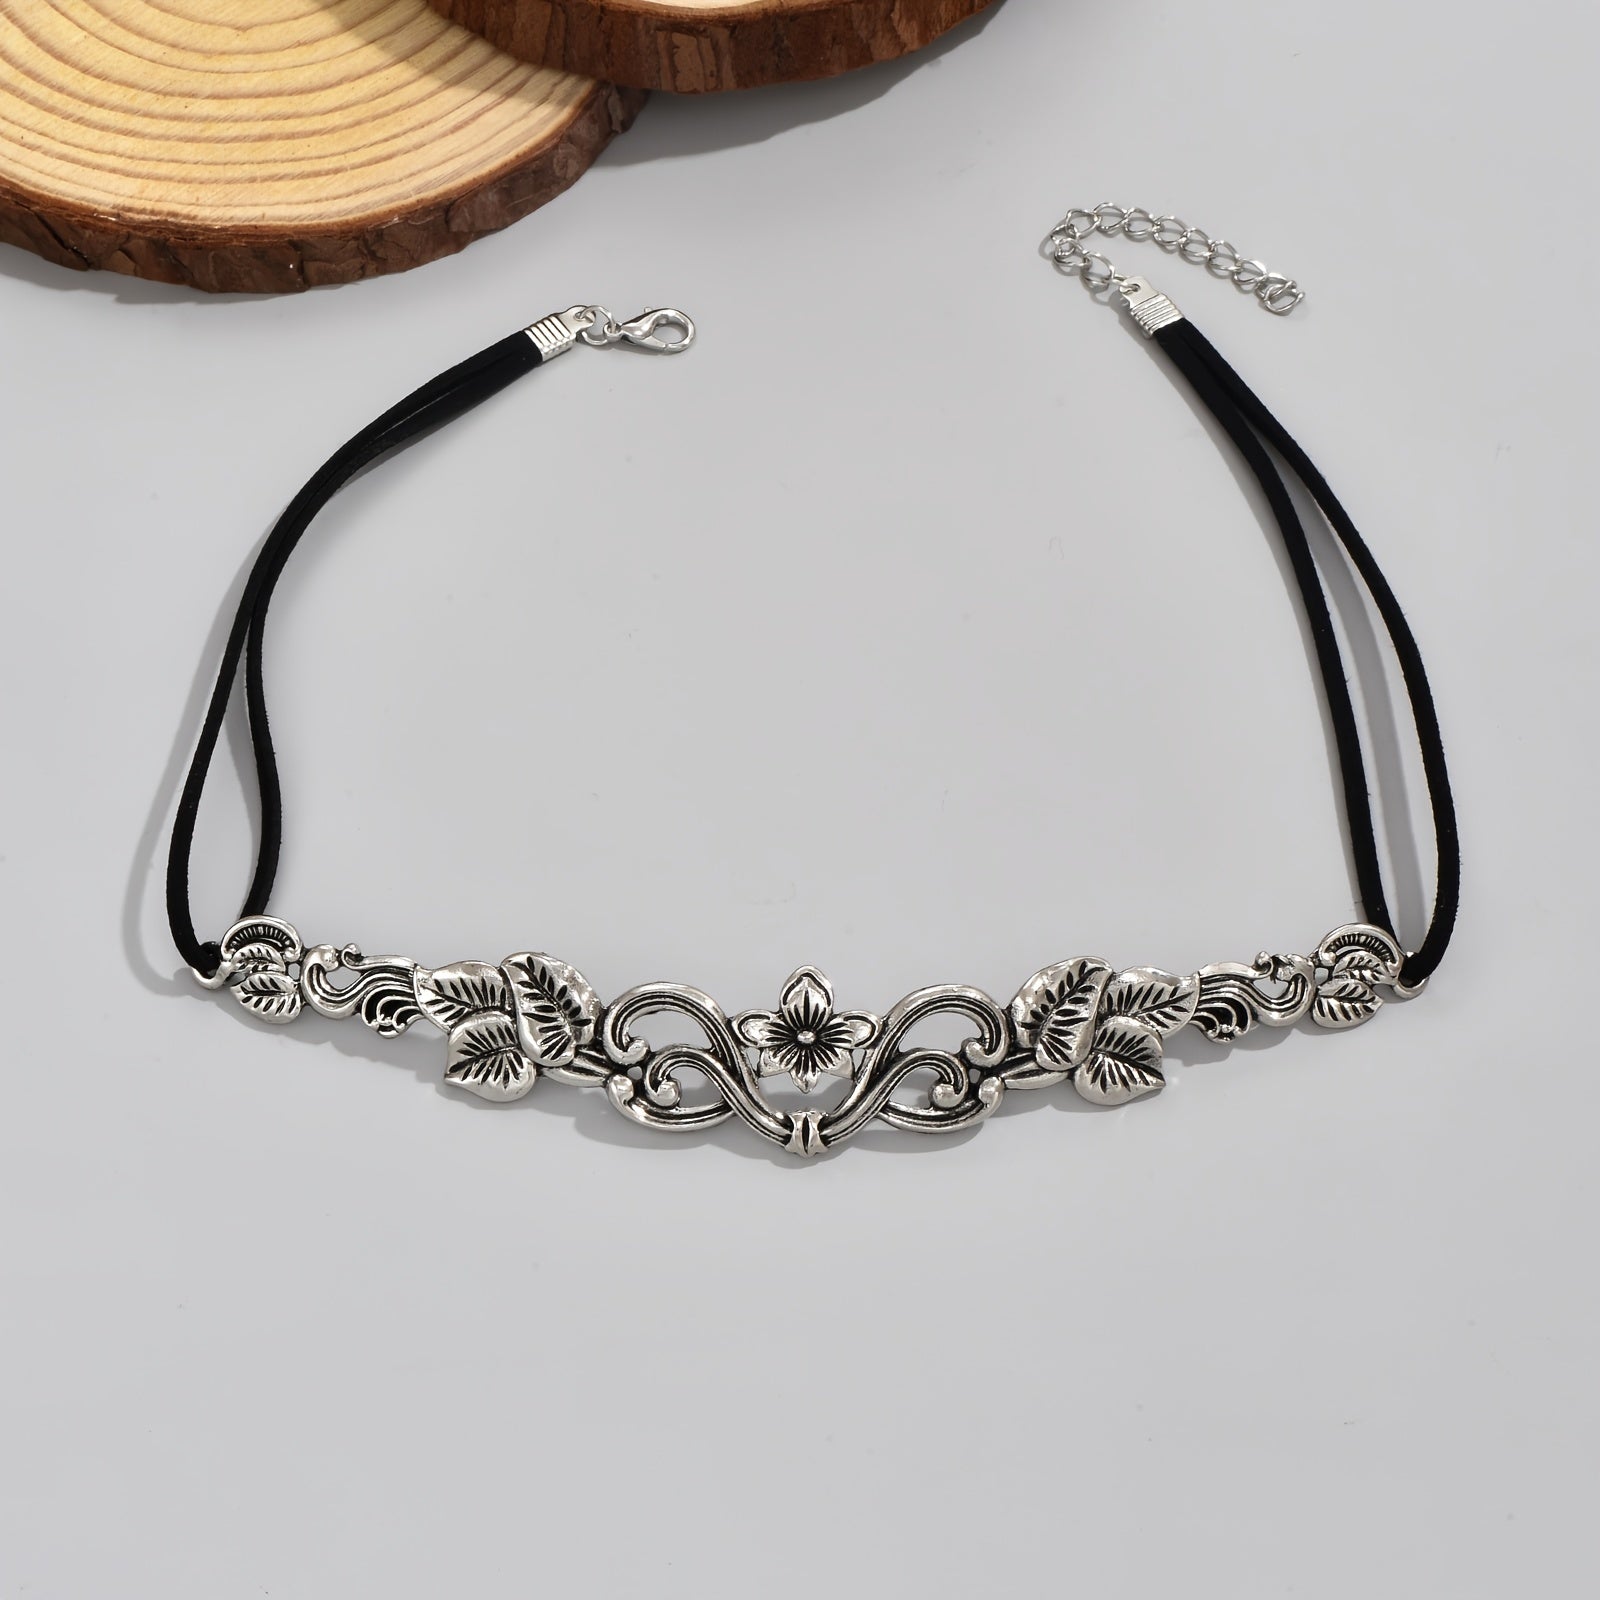 Gothic Vintage Choker Necklace - Leaves & Flowers Boho Adjustable Choker for Women